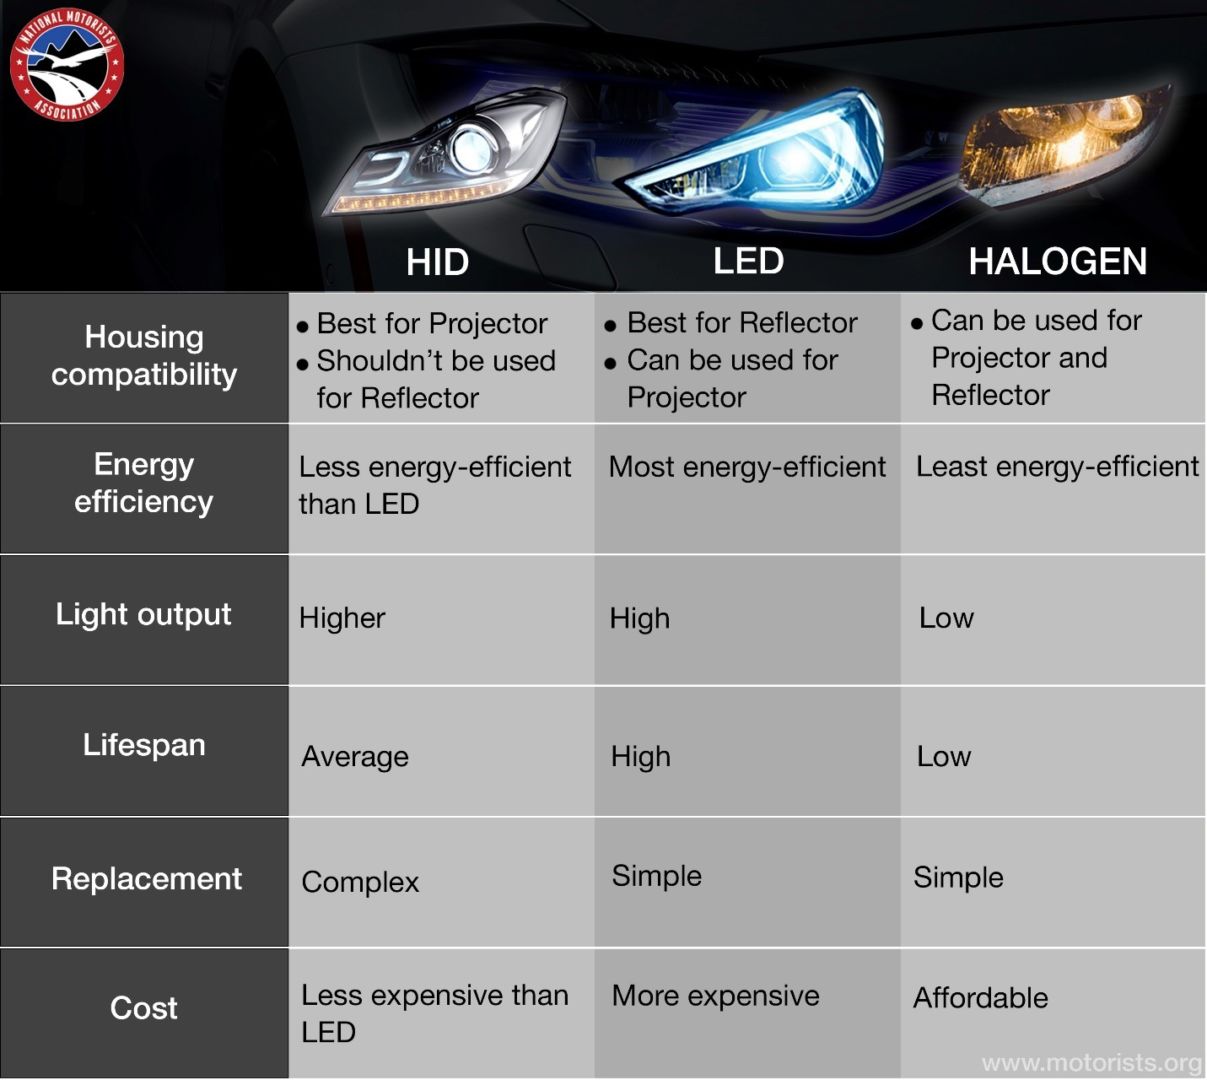 HID Headlight conversion kits